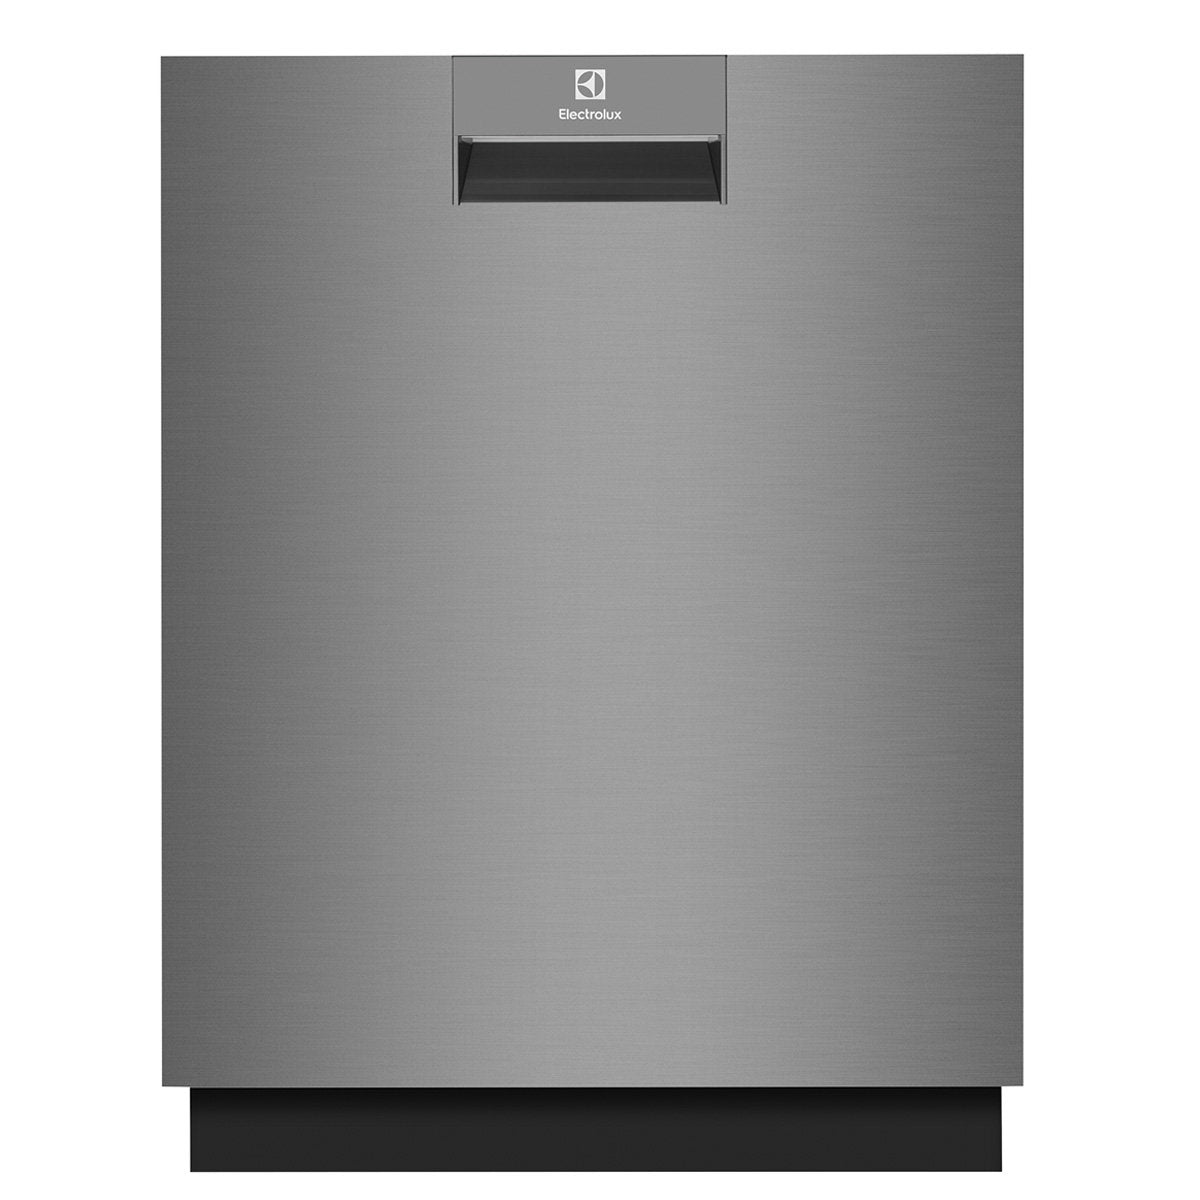 Electrolux Under Bench Dishwasher 14 P/S - Brisbane Home Appliances